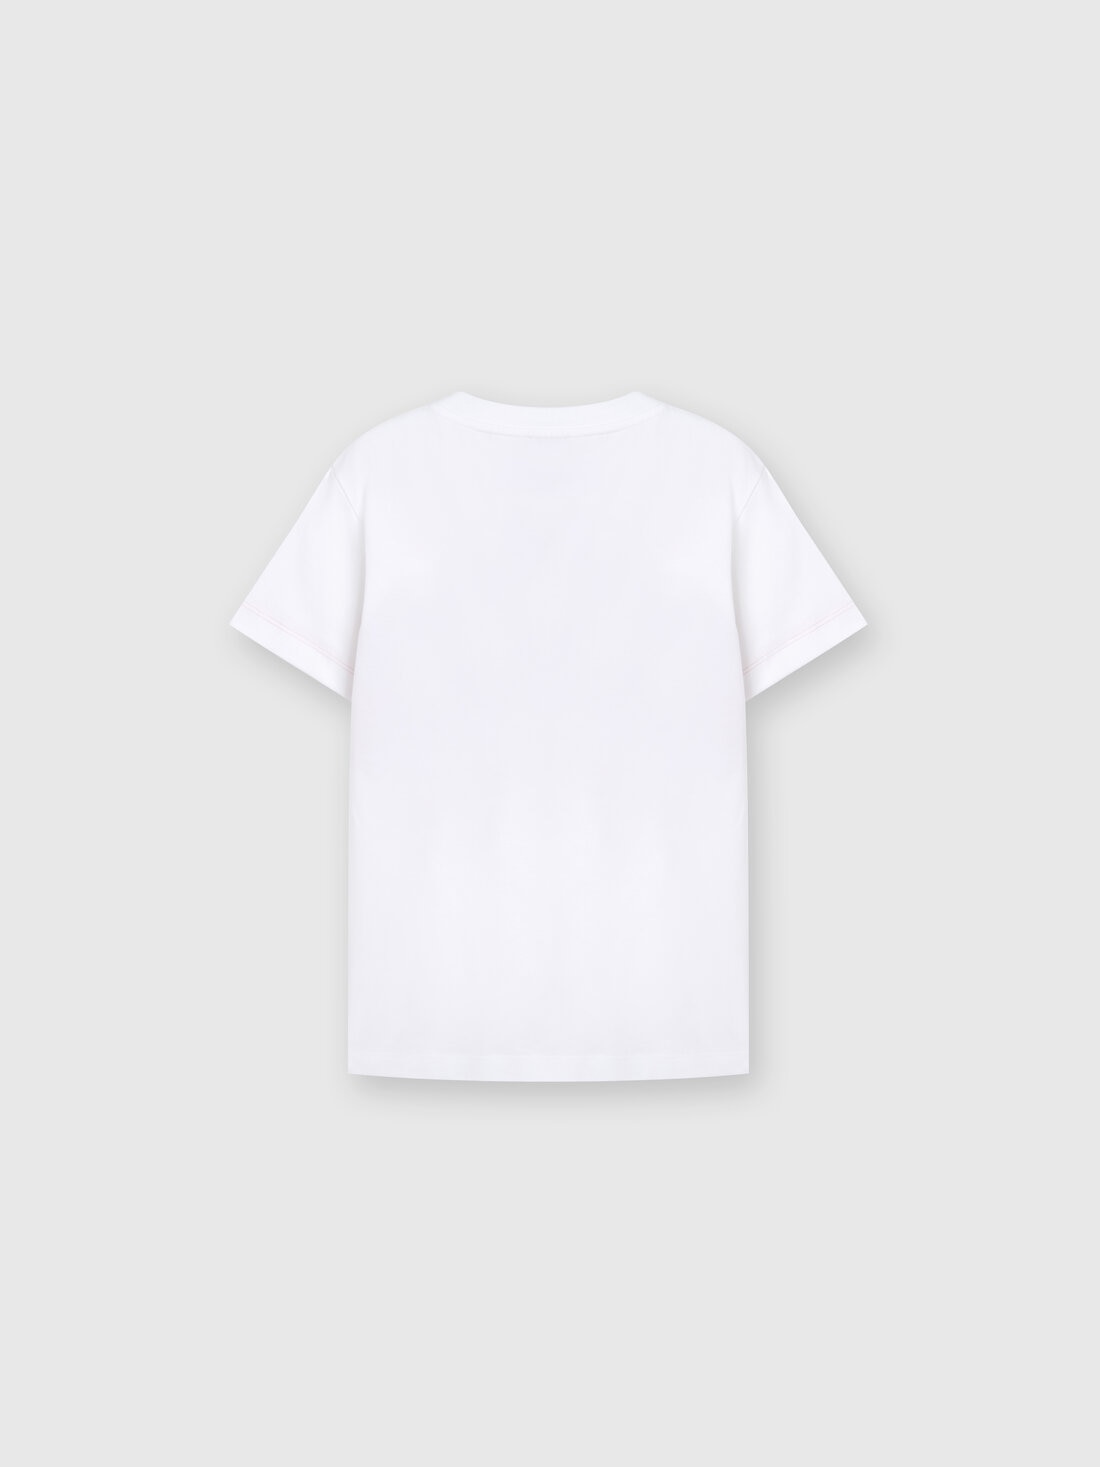 Cotton jersey T-shirt with chevron insert and logo, Multicoloured  - KS24SL01BV00FVS019I - 1